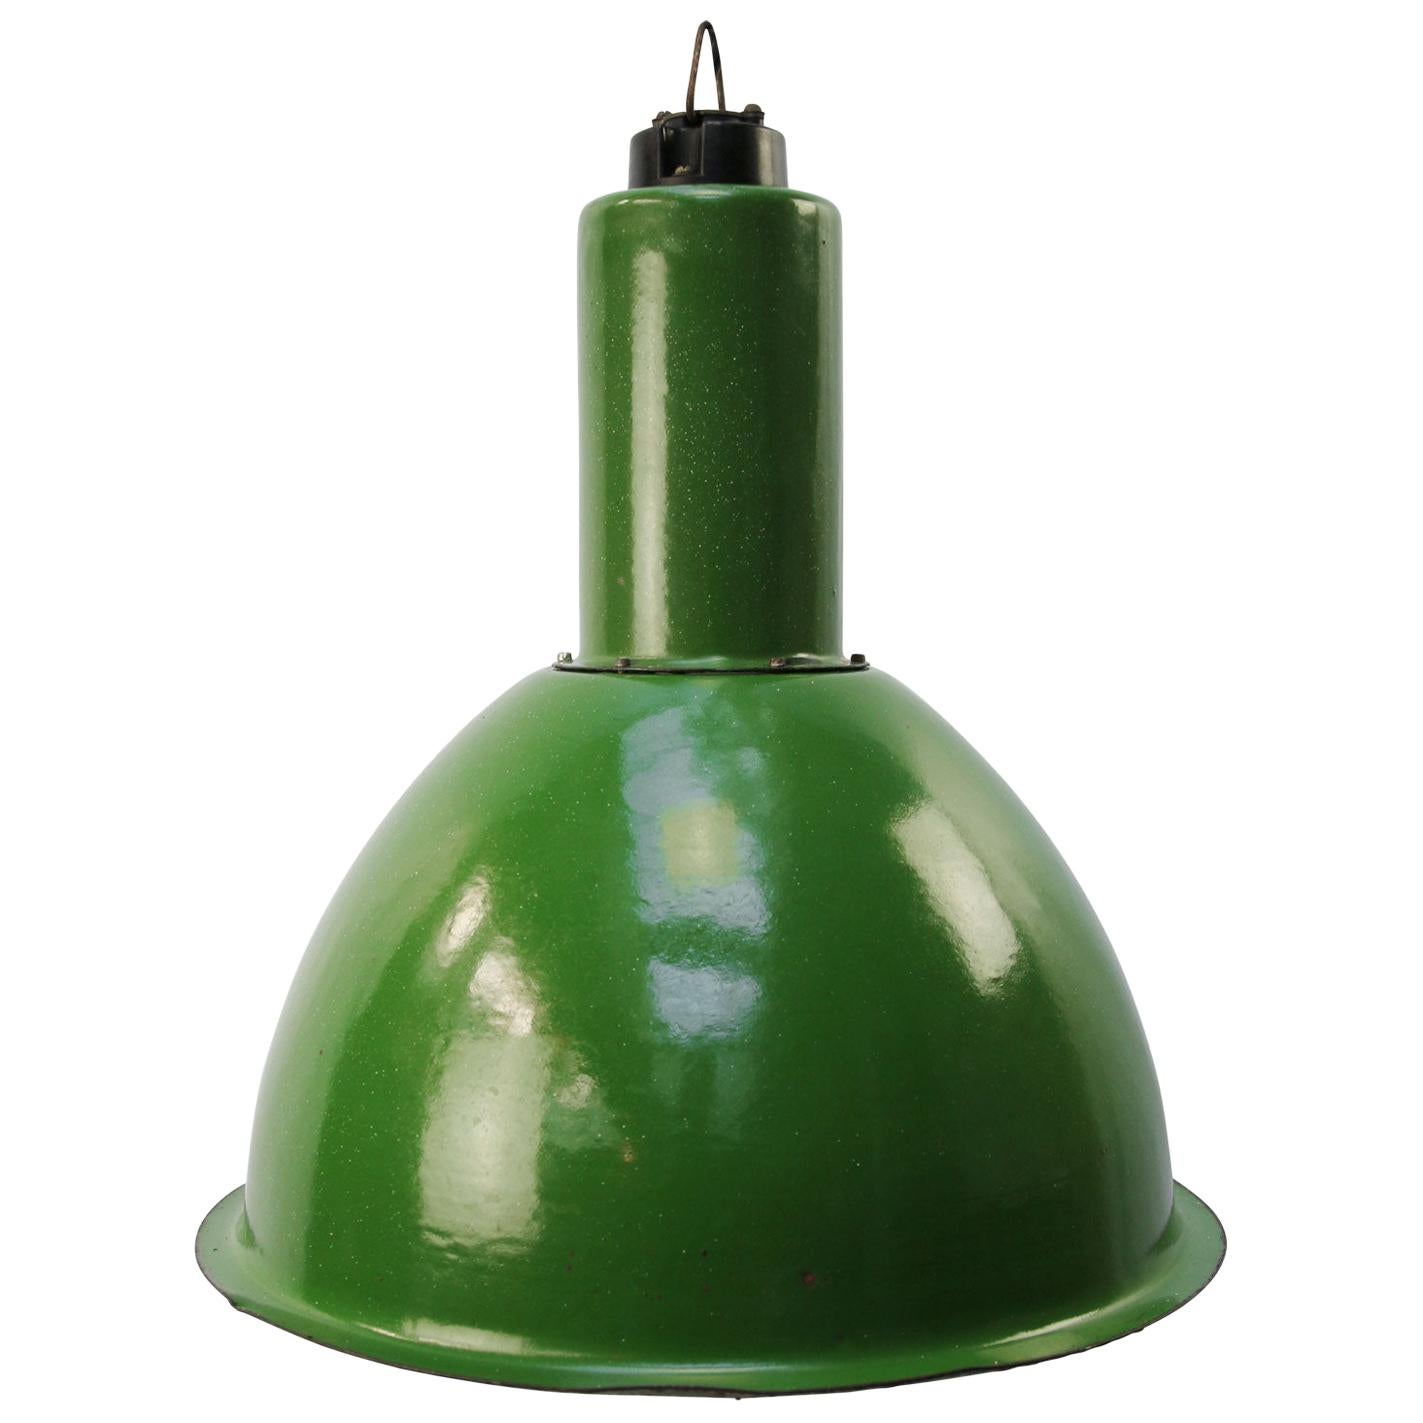 Green Enamel Vintage Industrial Pendant Light